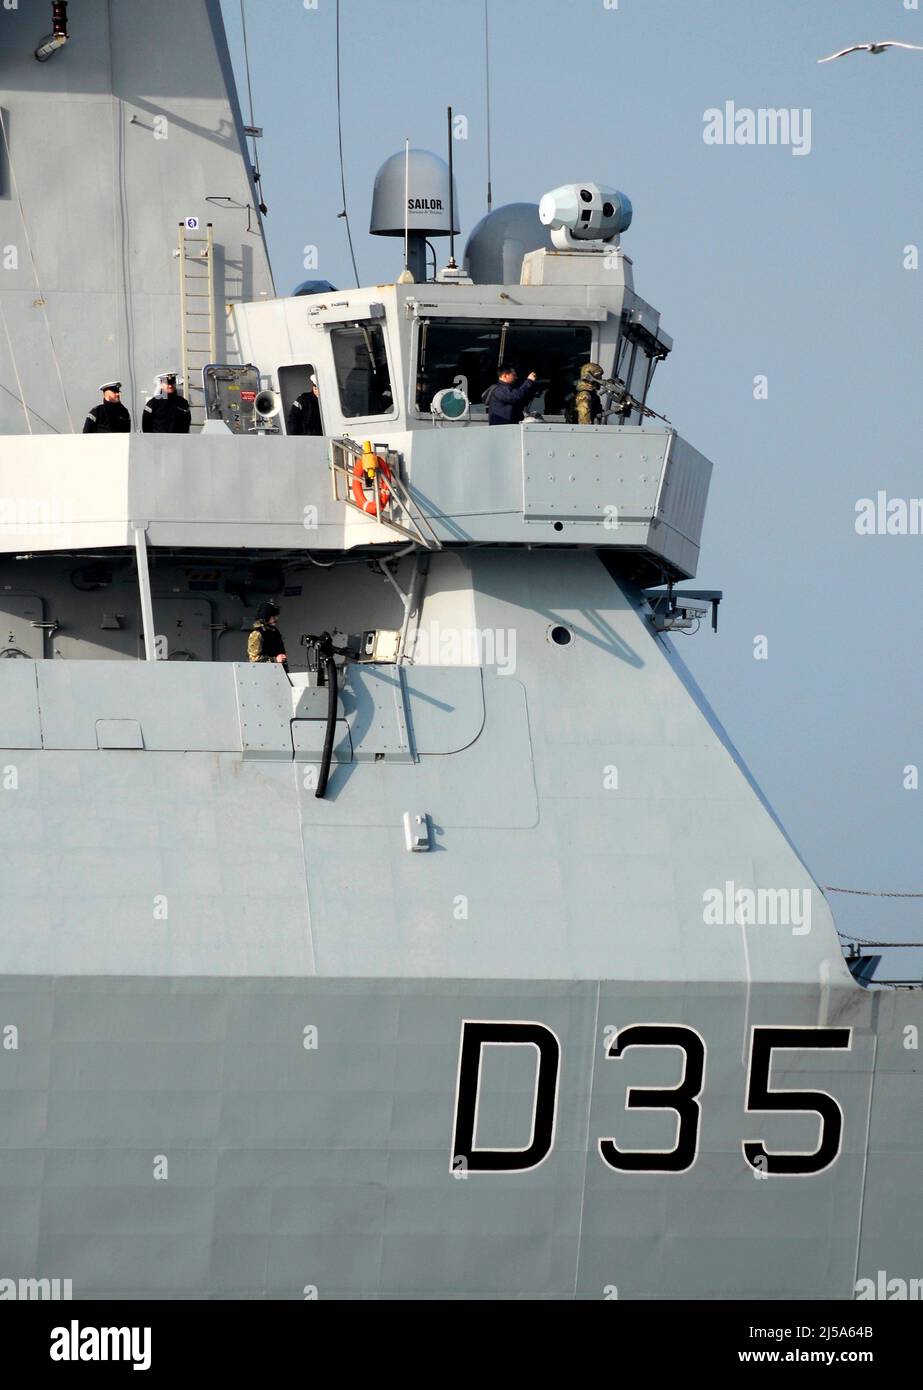 AJAXNETPHOTO. - 12TH. MÄRZ 2014. - PORTSMOUTH, ENGLAND. - TYP 45 ZERSTÖRER HMS DRAGON ANKUNFT IM HAFEN. FOTO: JONATHAN EASTLAND/AJAX REF:DTH141203 7449 Stockfoto